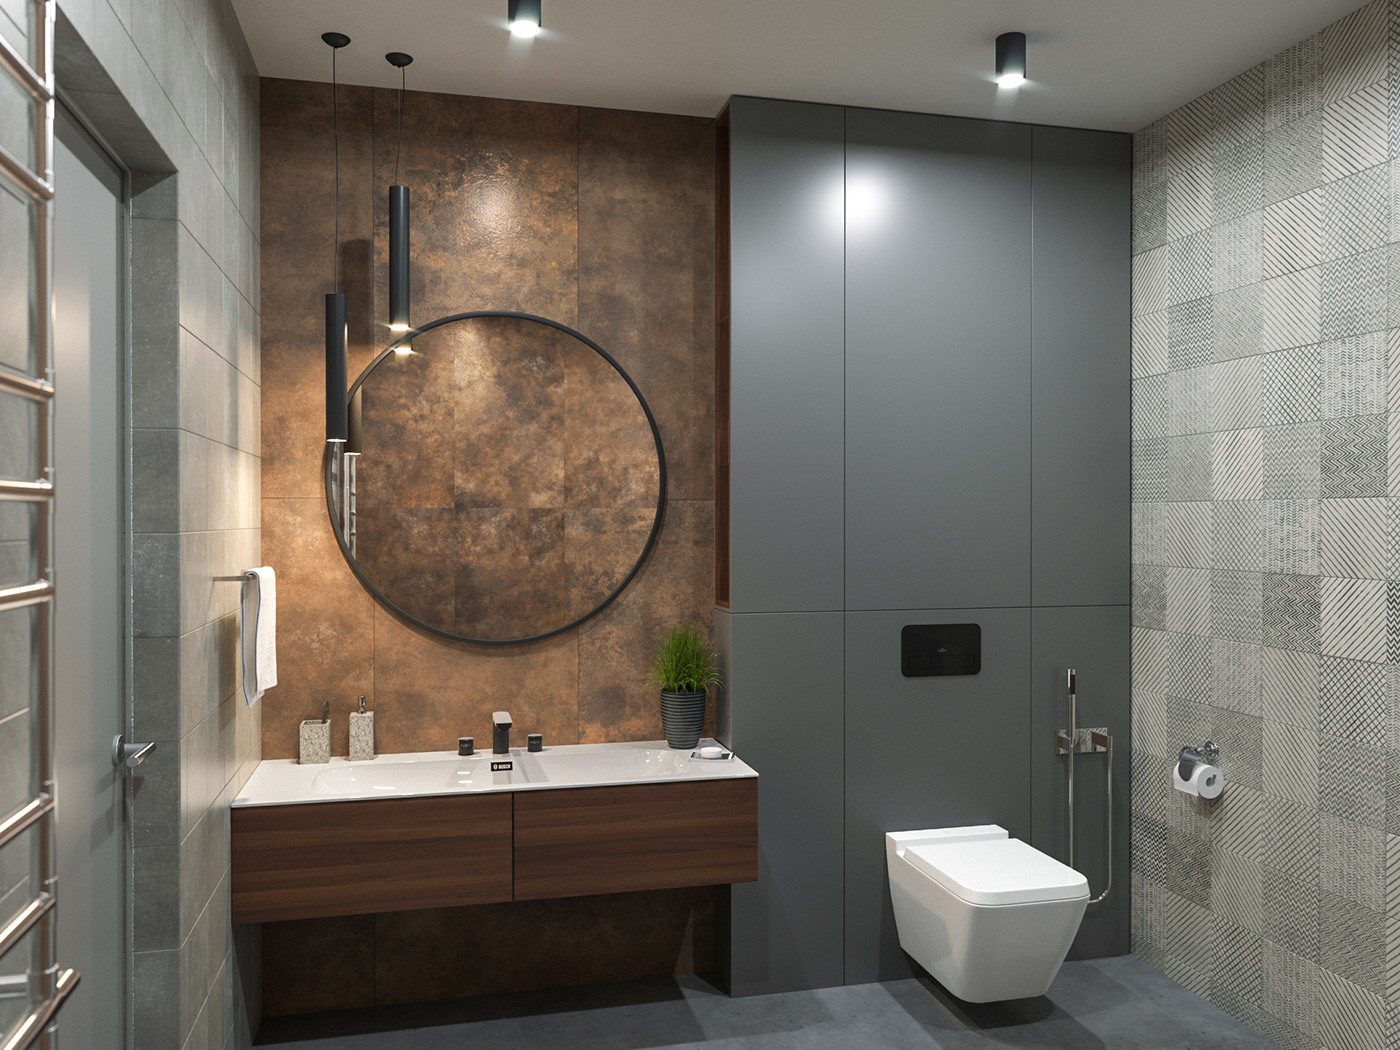 3dmax 3drendering bathroomdesign design homeyspace interiordesign moderndesign mood дизайн